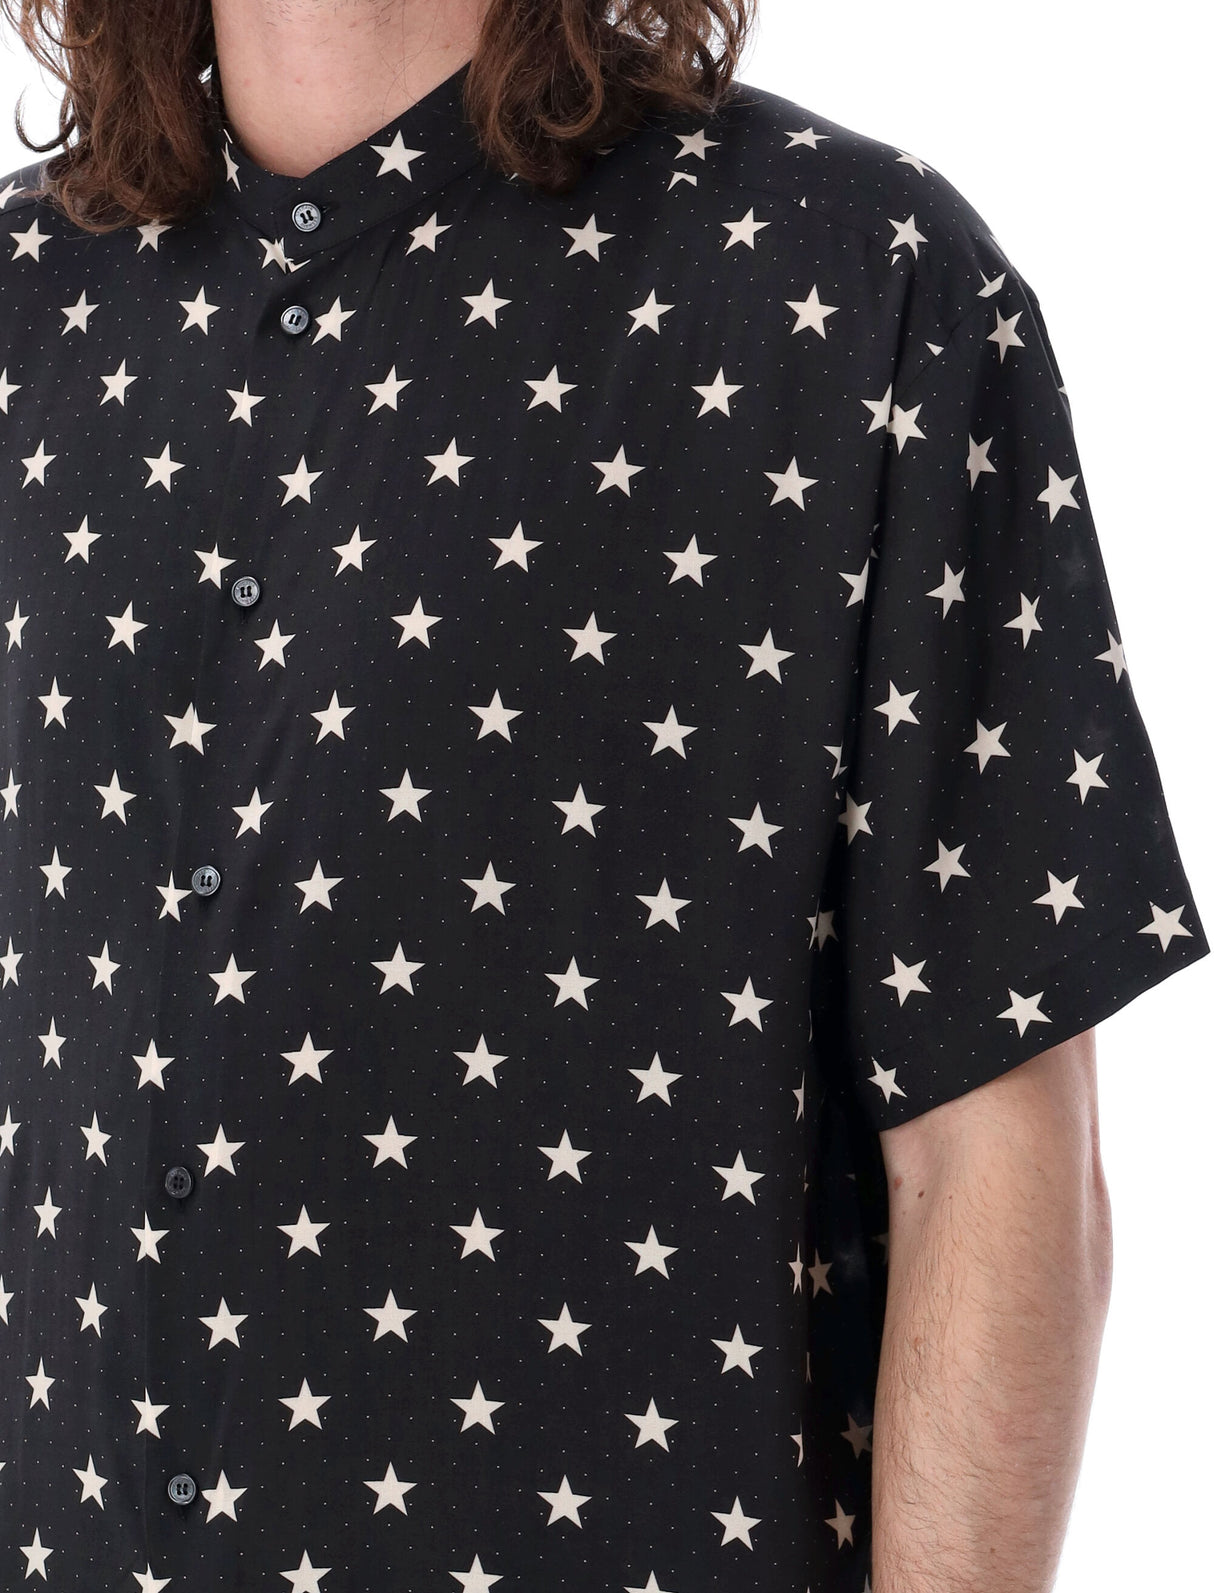 BALMAIN Men's Star Print Shirt - Black